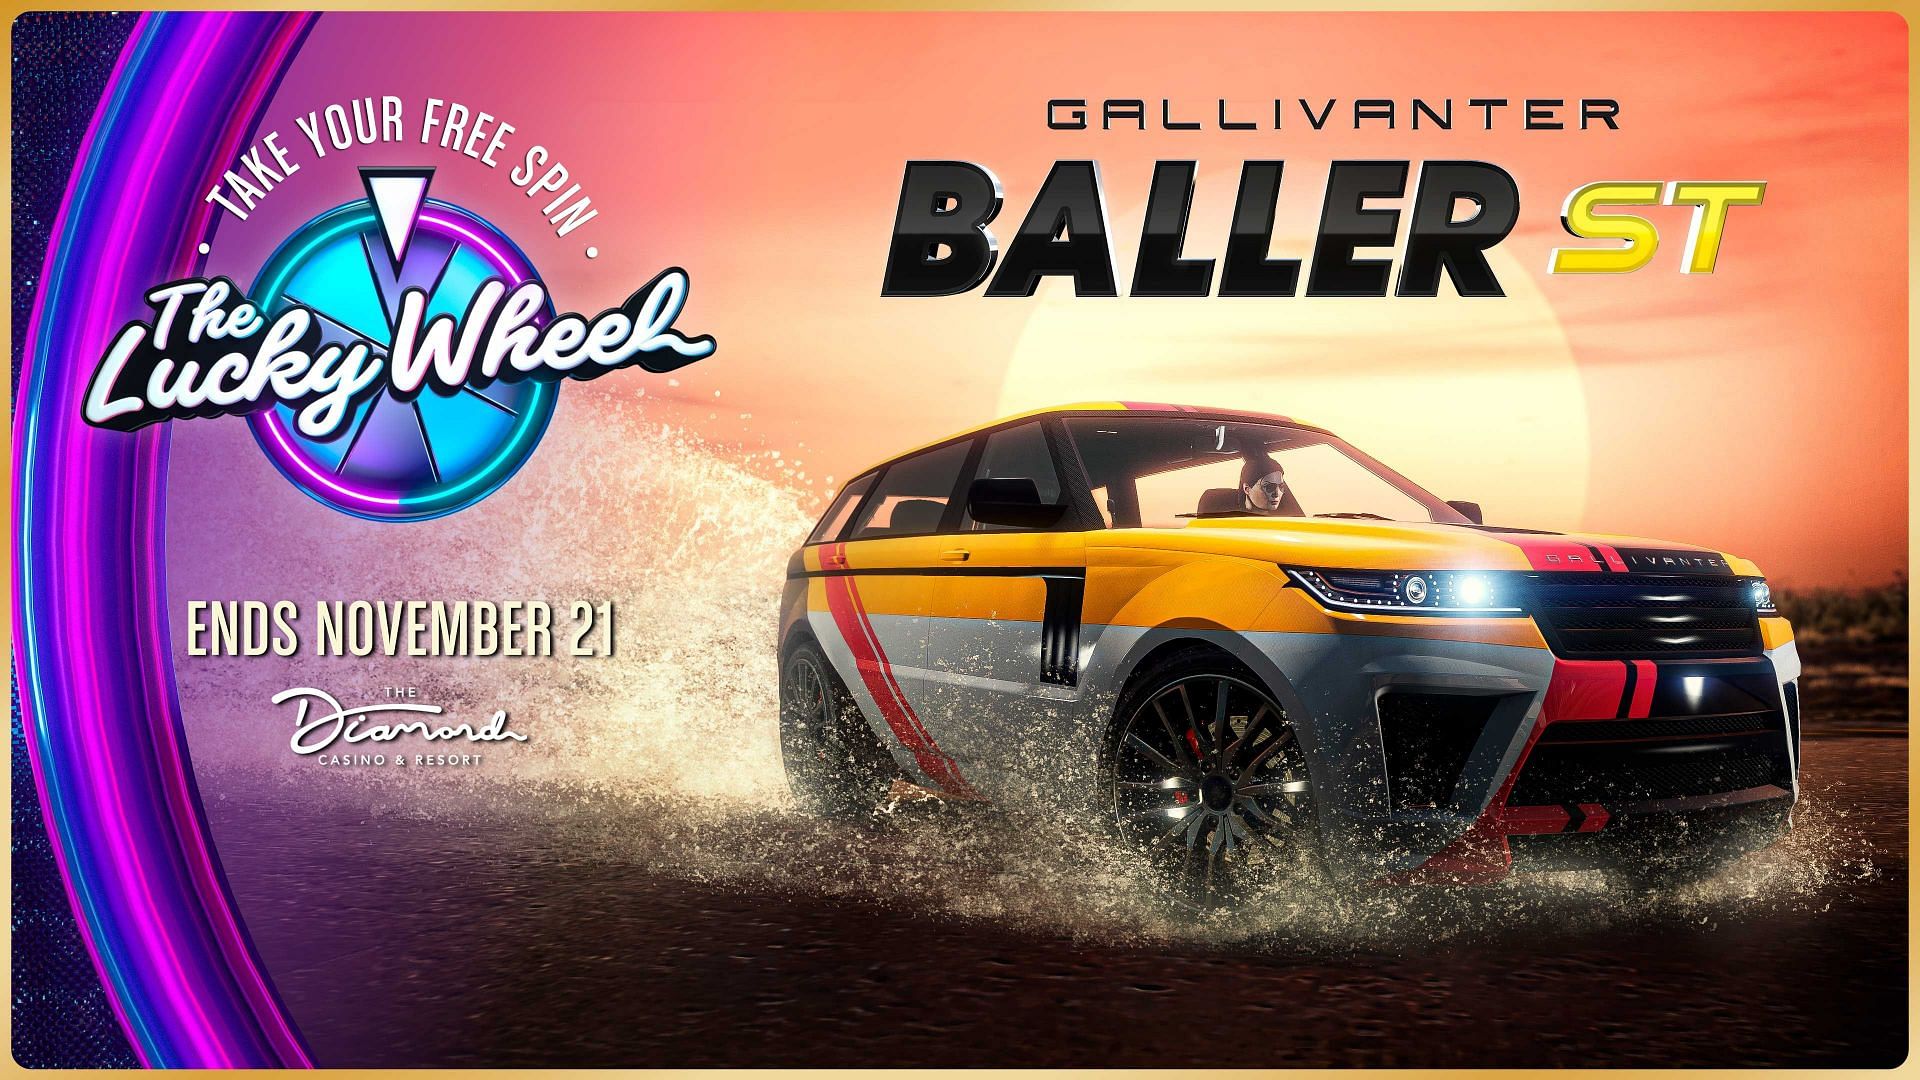 The Gallivanter Baller ST (Image via Rockstar Games)